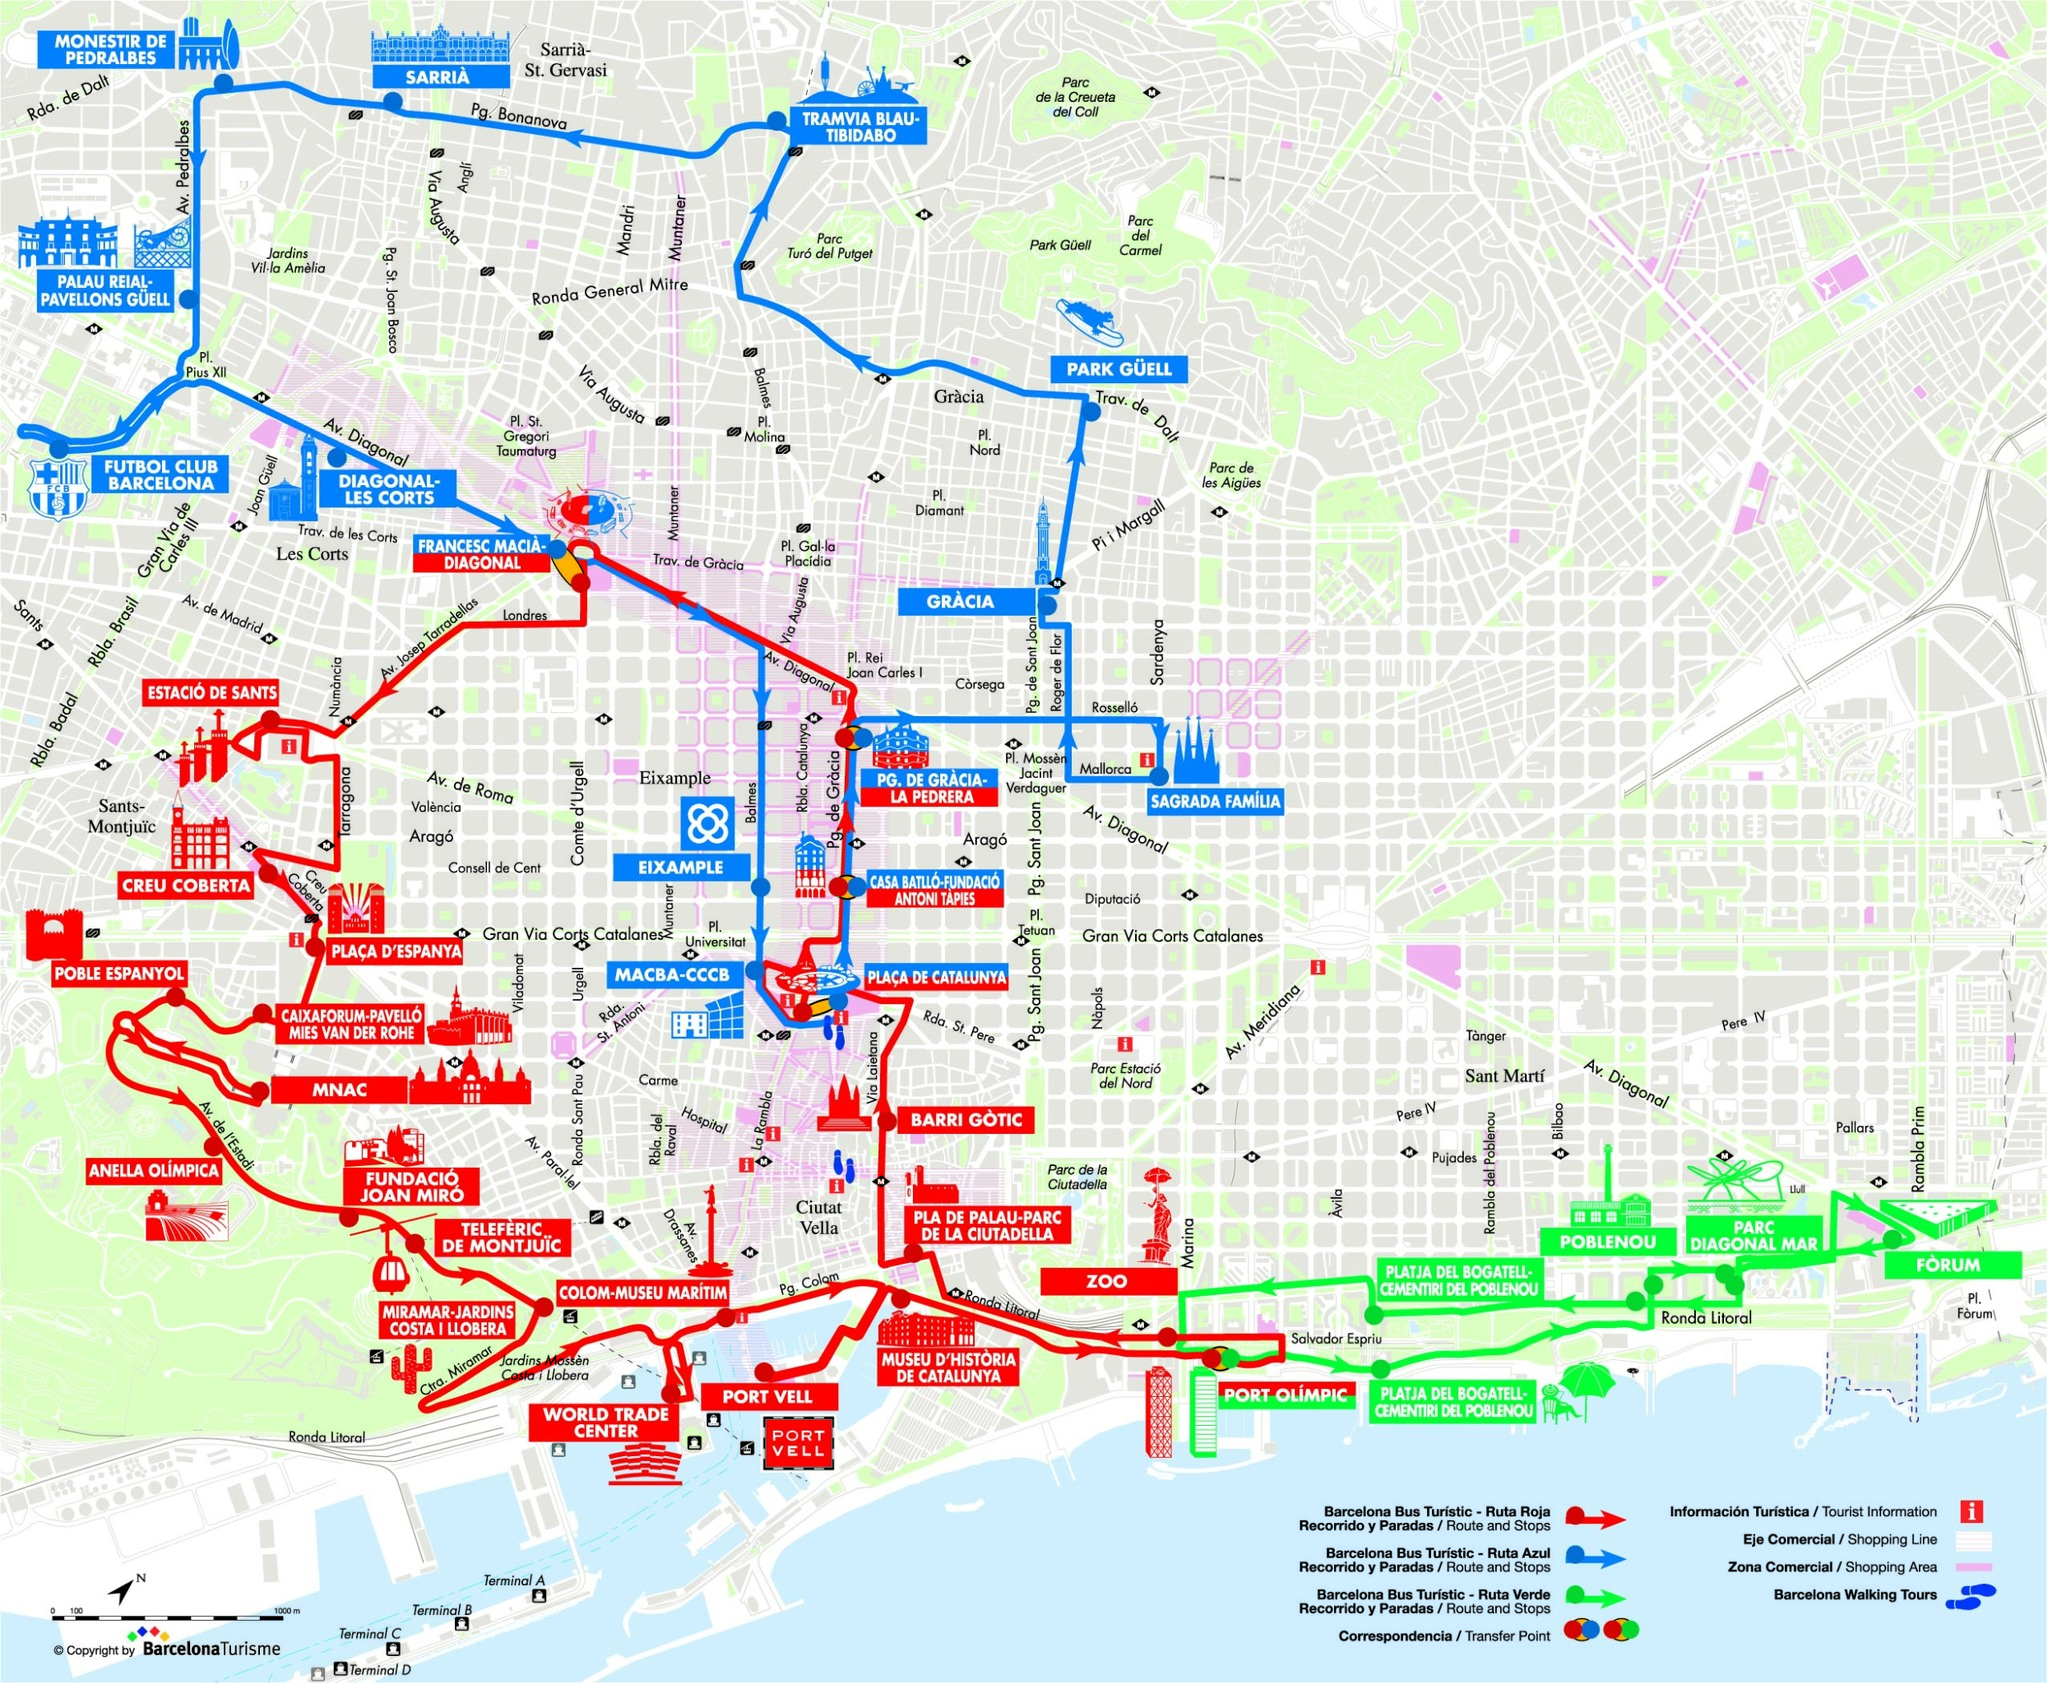 Barcelona Bus Turistic - mapa